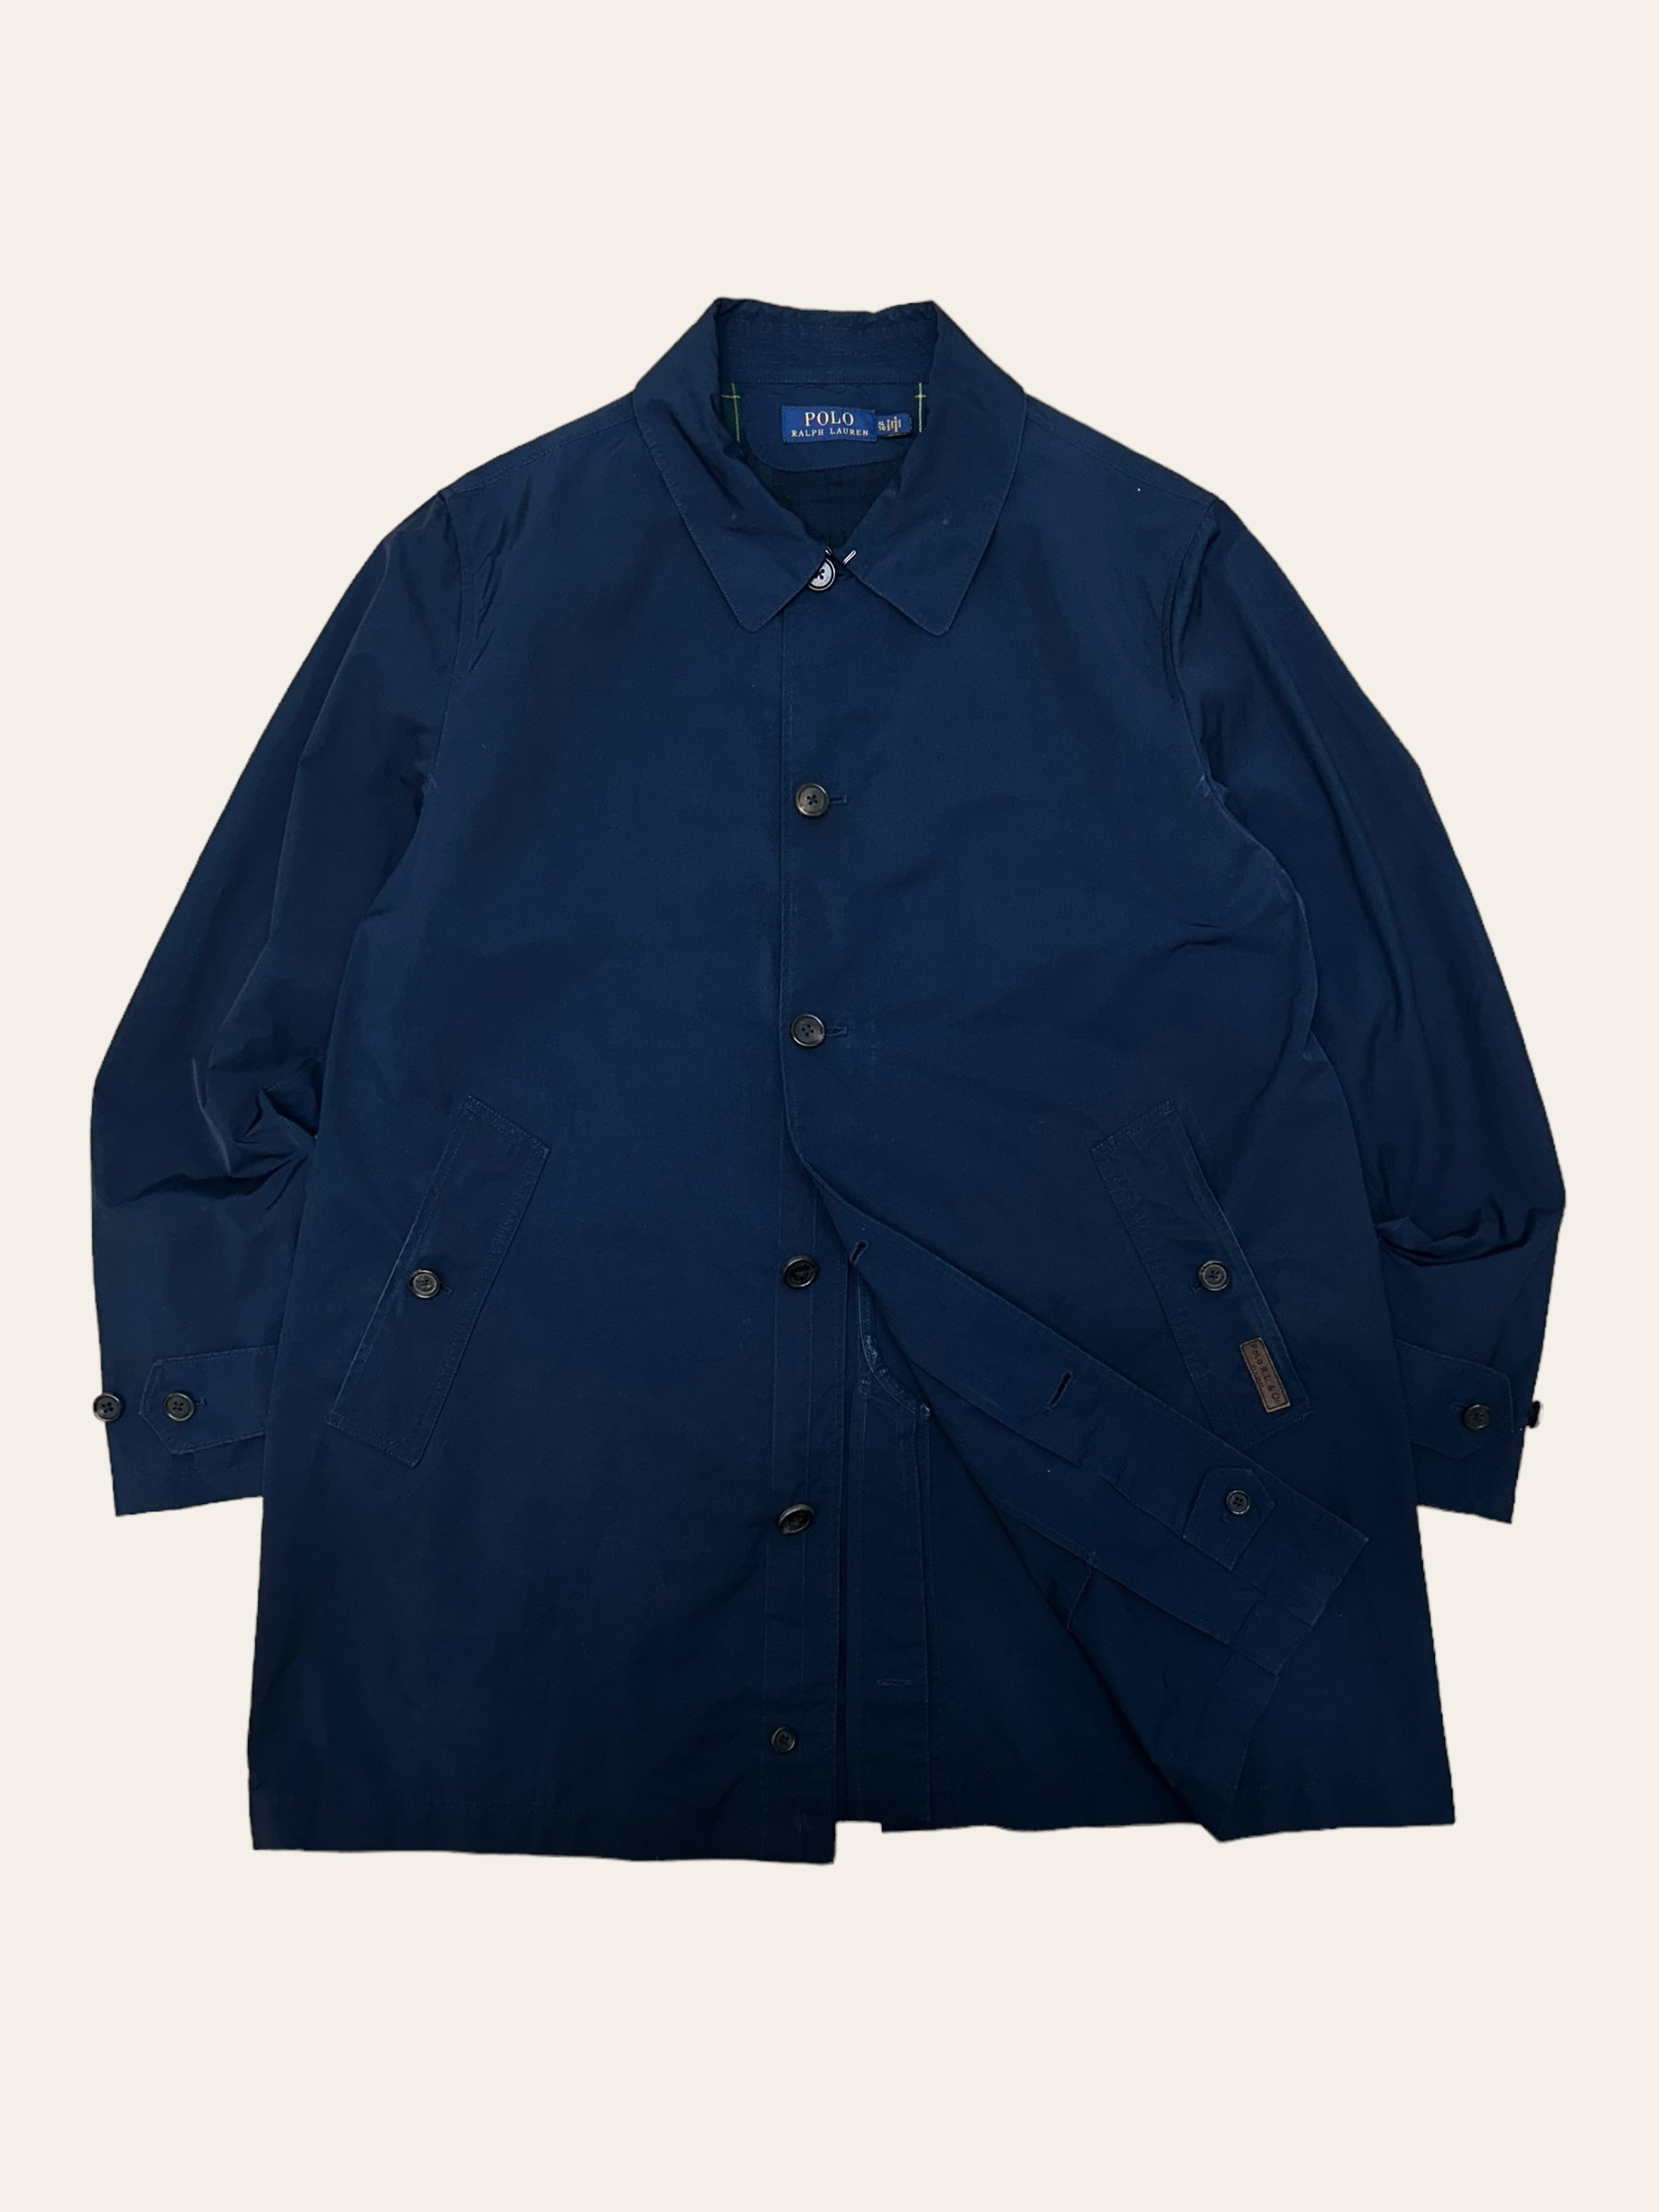 Polo ralph lauren navy nylon rain coat XL